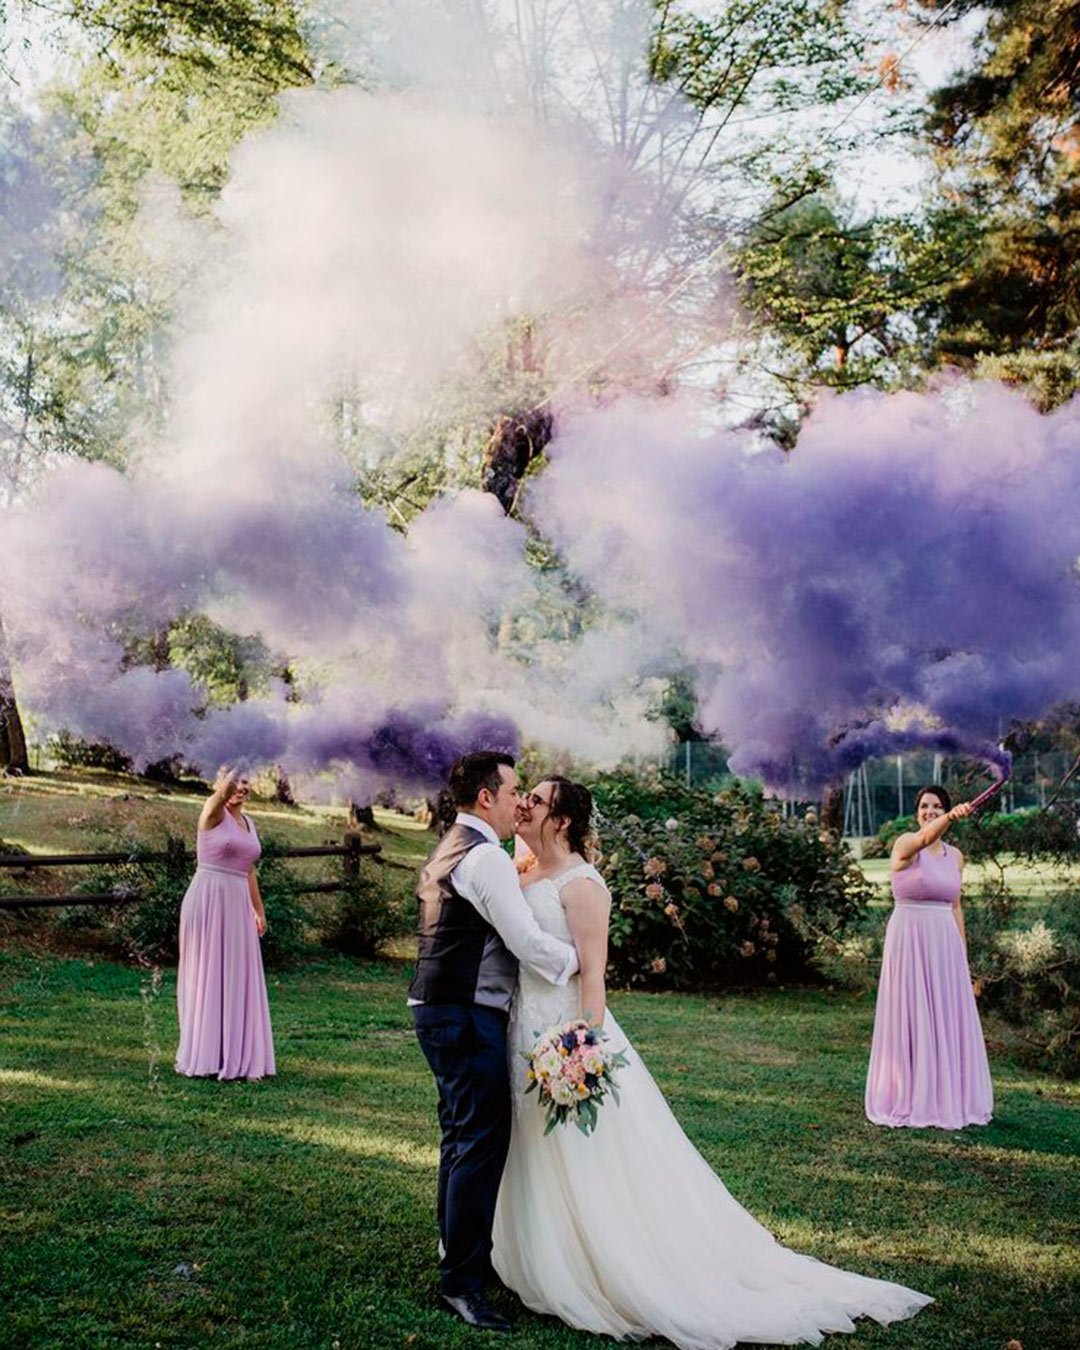 lilac wedding colors bridesmaid dresses smoke bomb